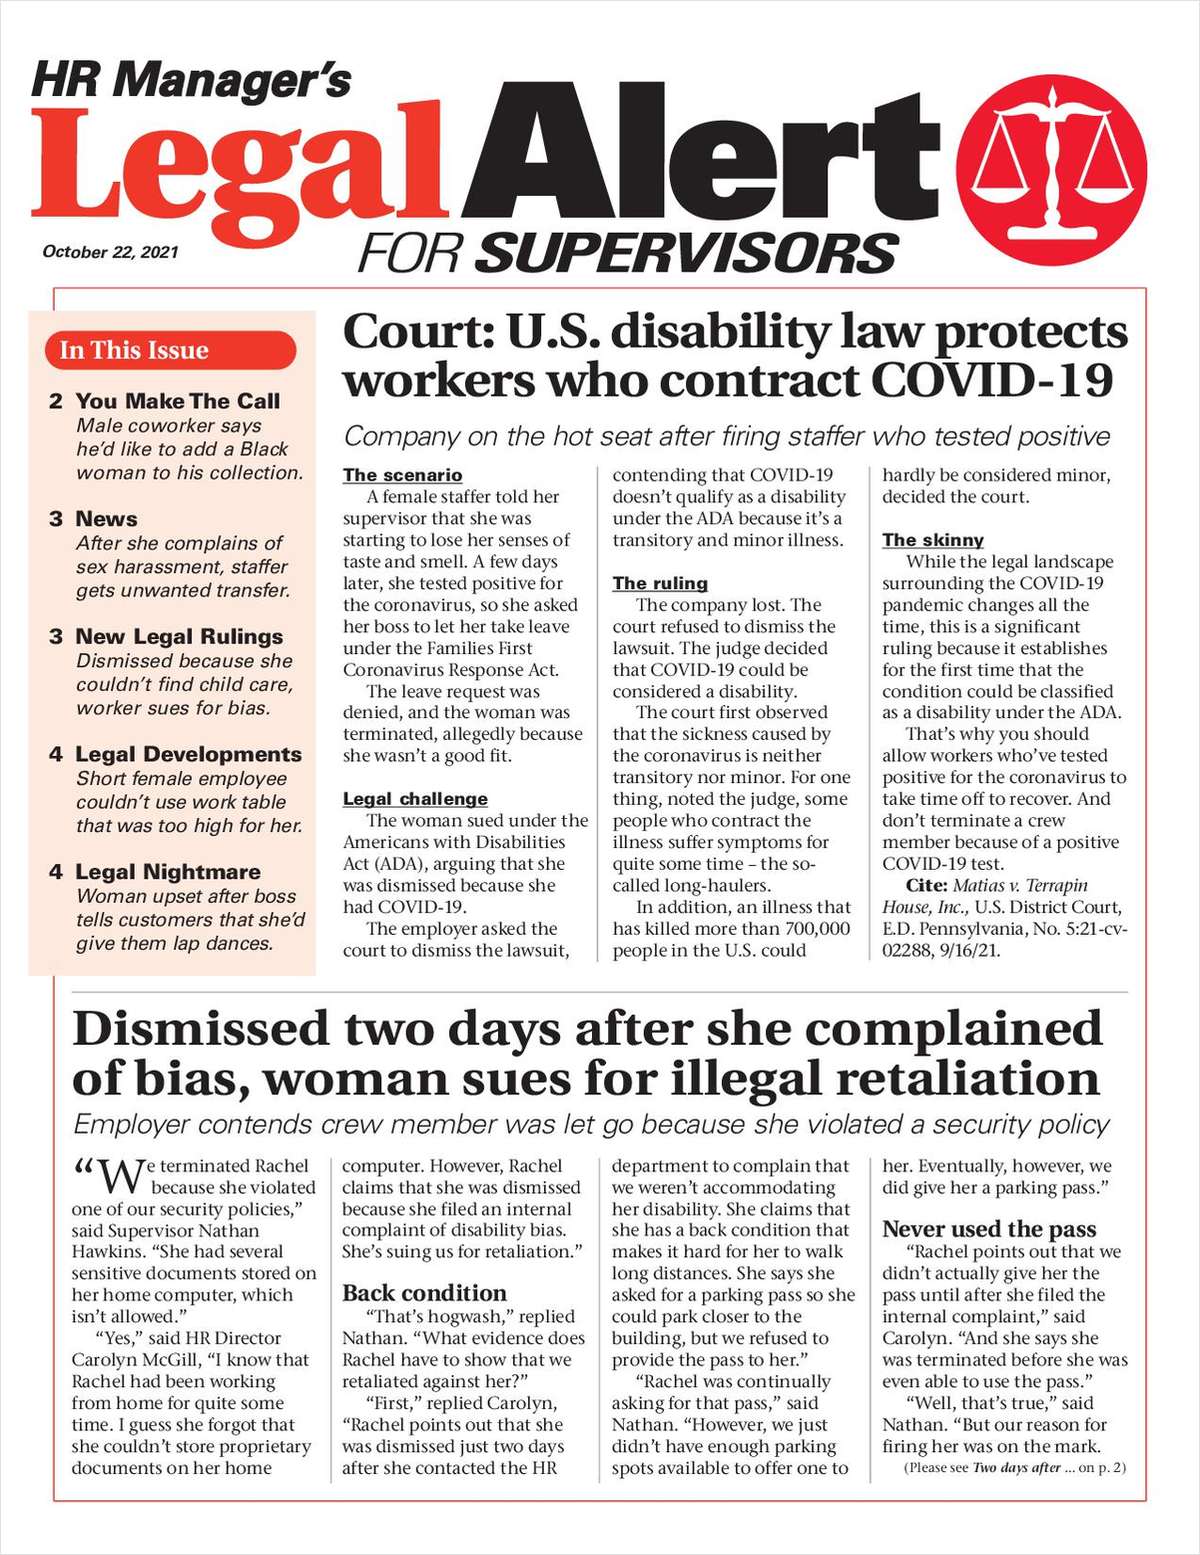 HR Manager's Legal Alert for Supervisors Newsletter: October 22 Edition